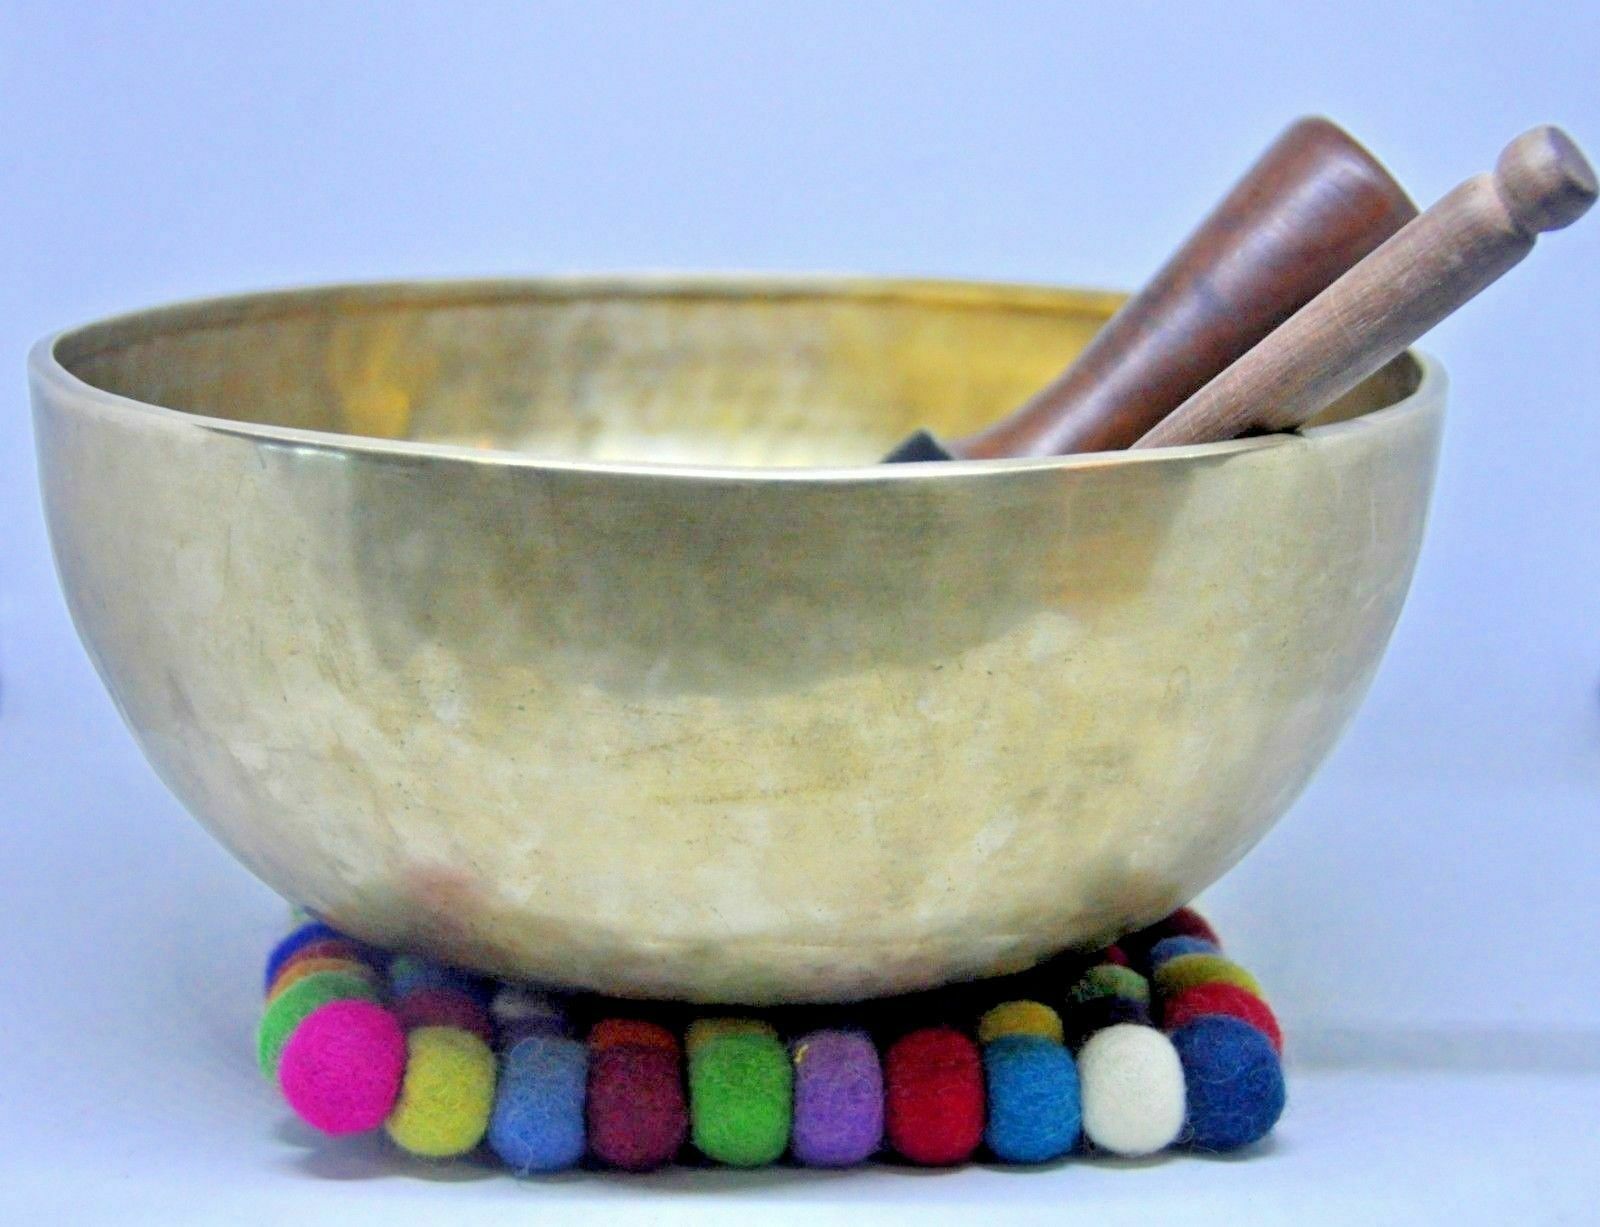 12 inch-large Tibetan bowls for healing meditation singing bowls - Yoga Therapy